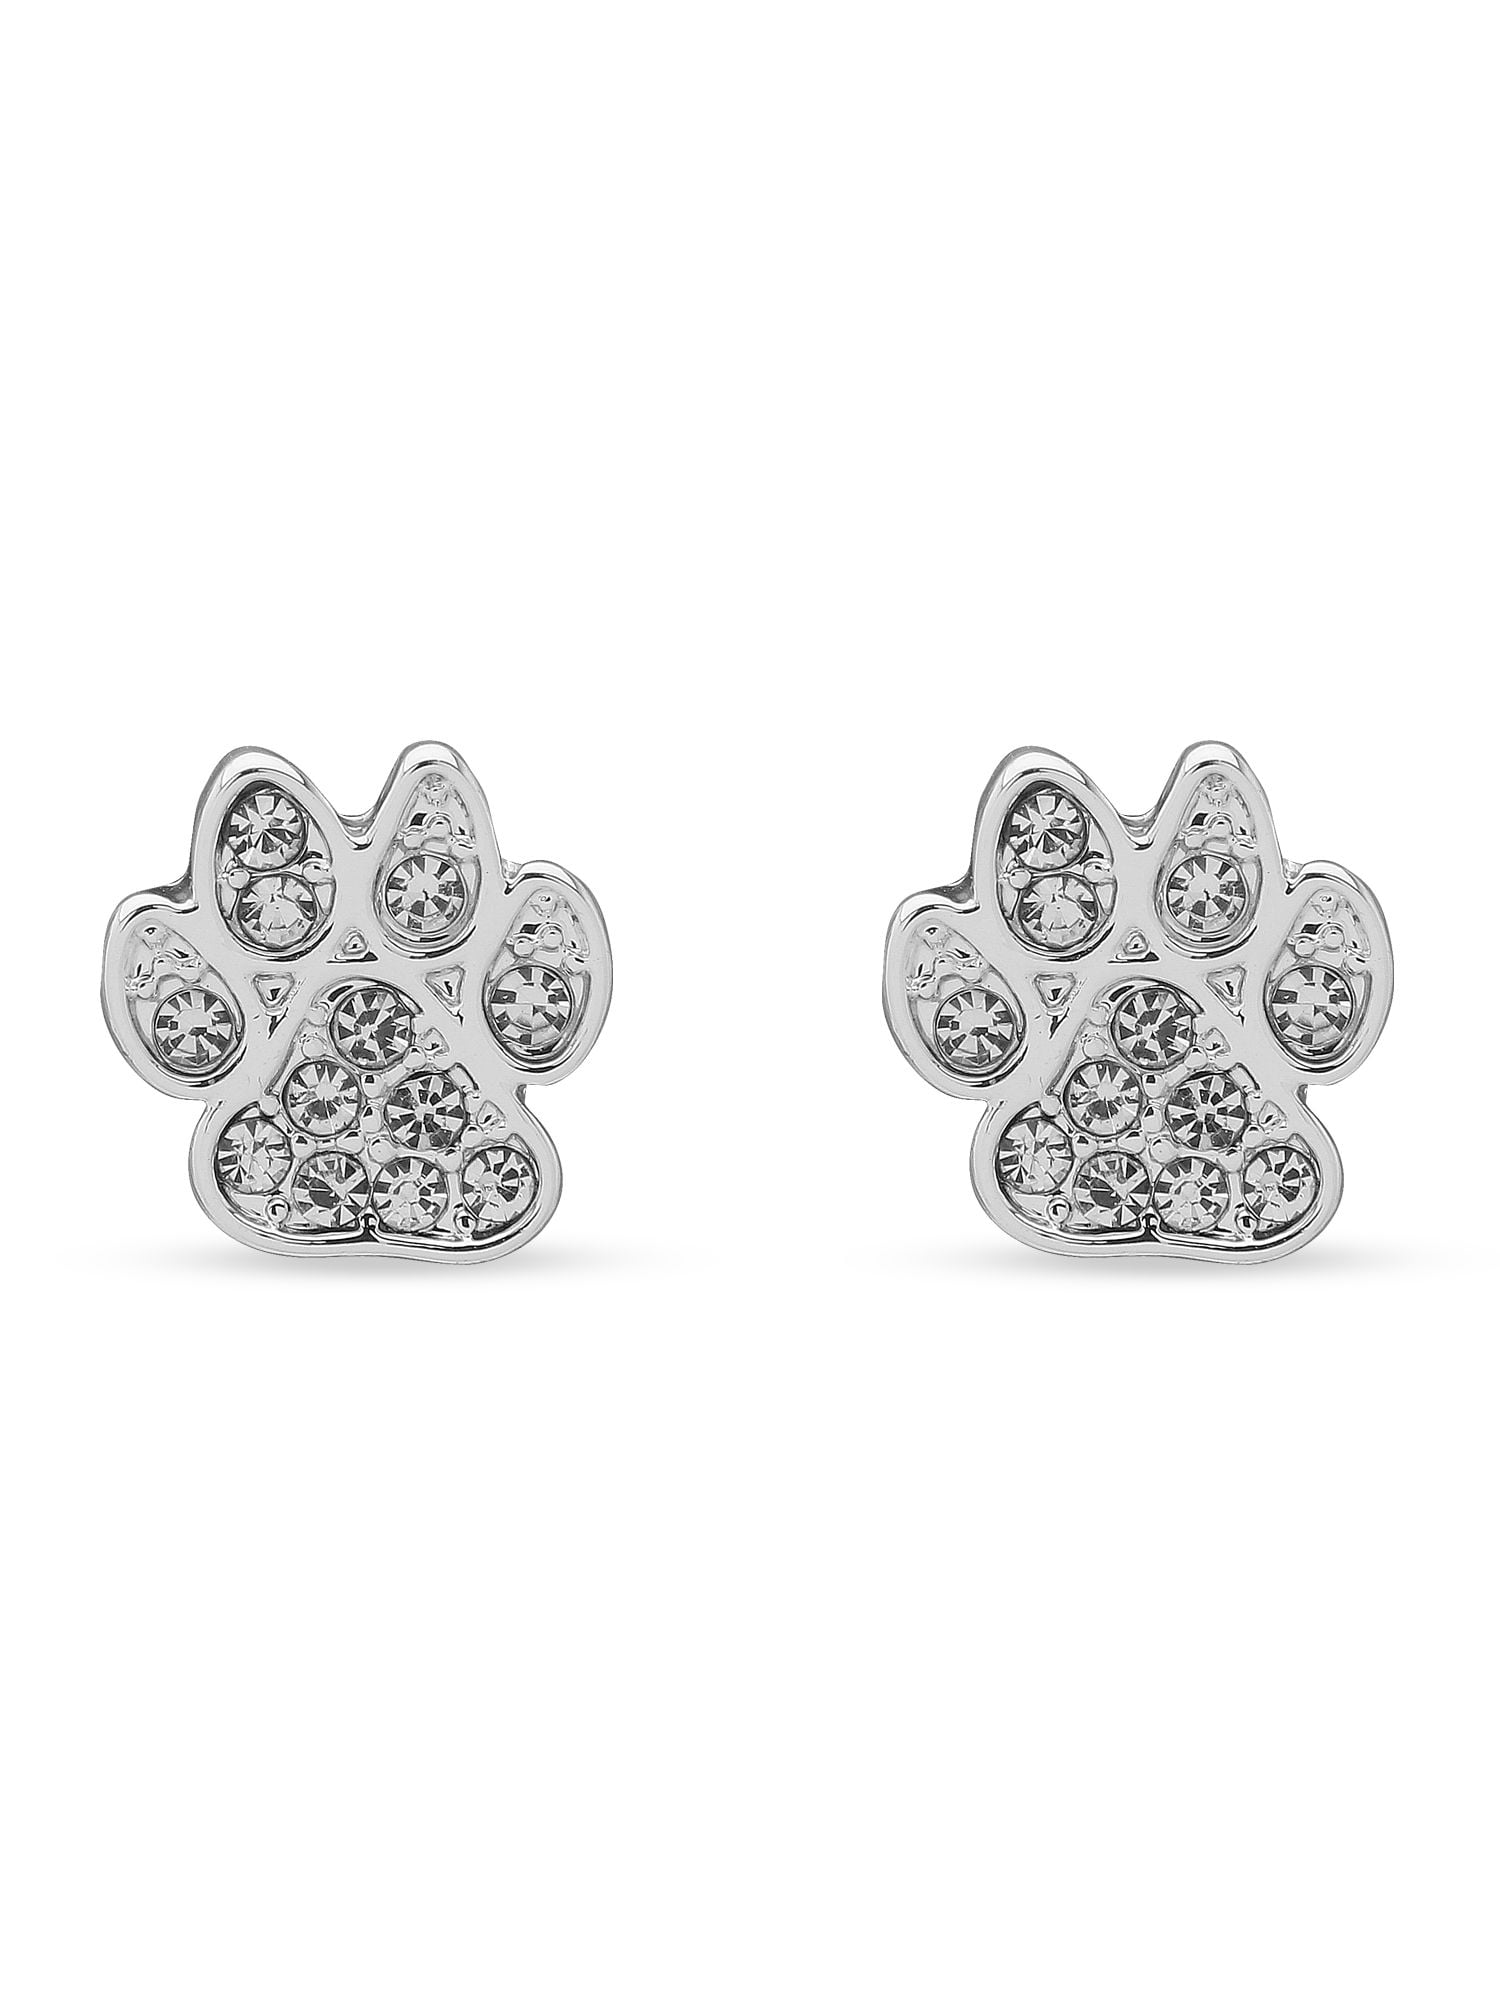 Bunnyberry Polished Crystal Paw Print Stud Earrings